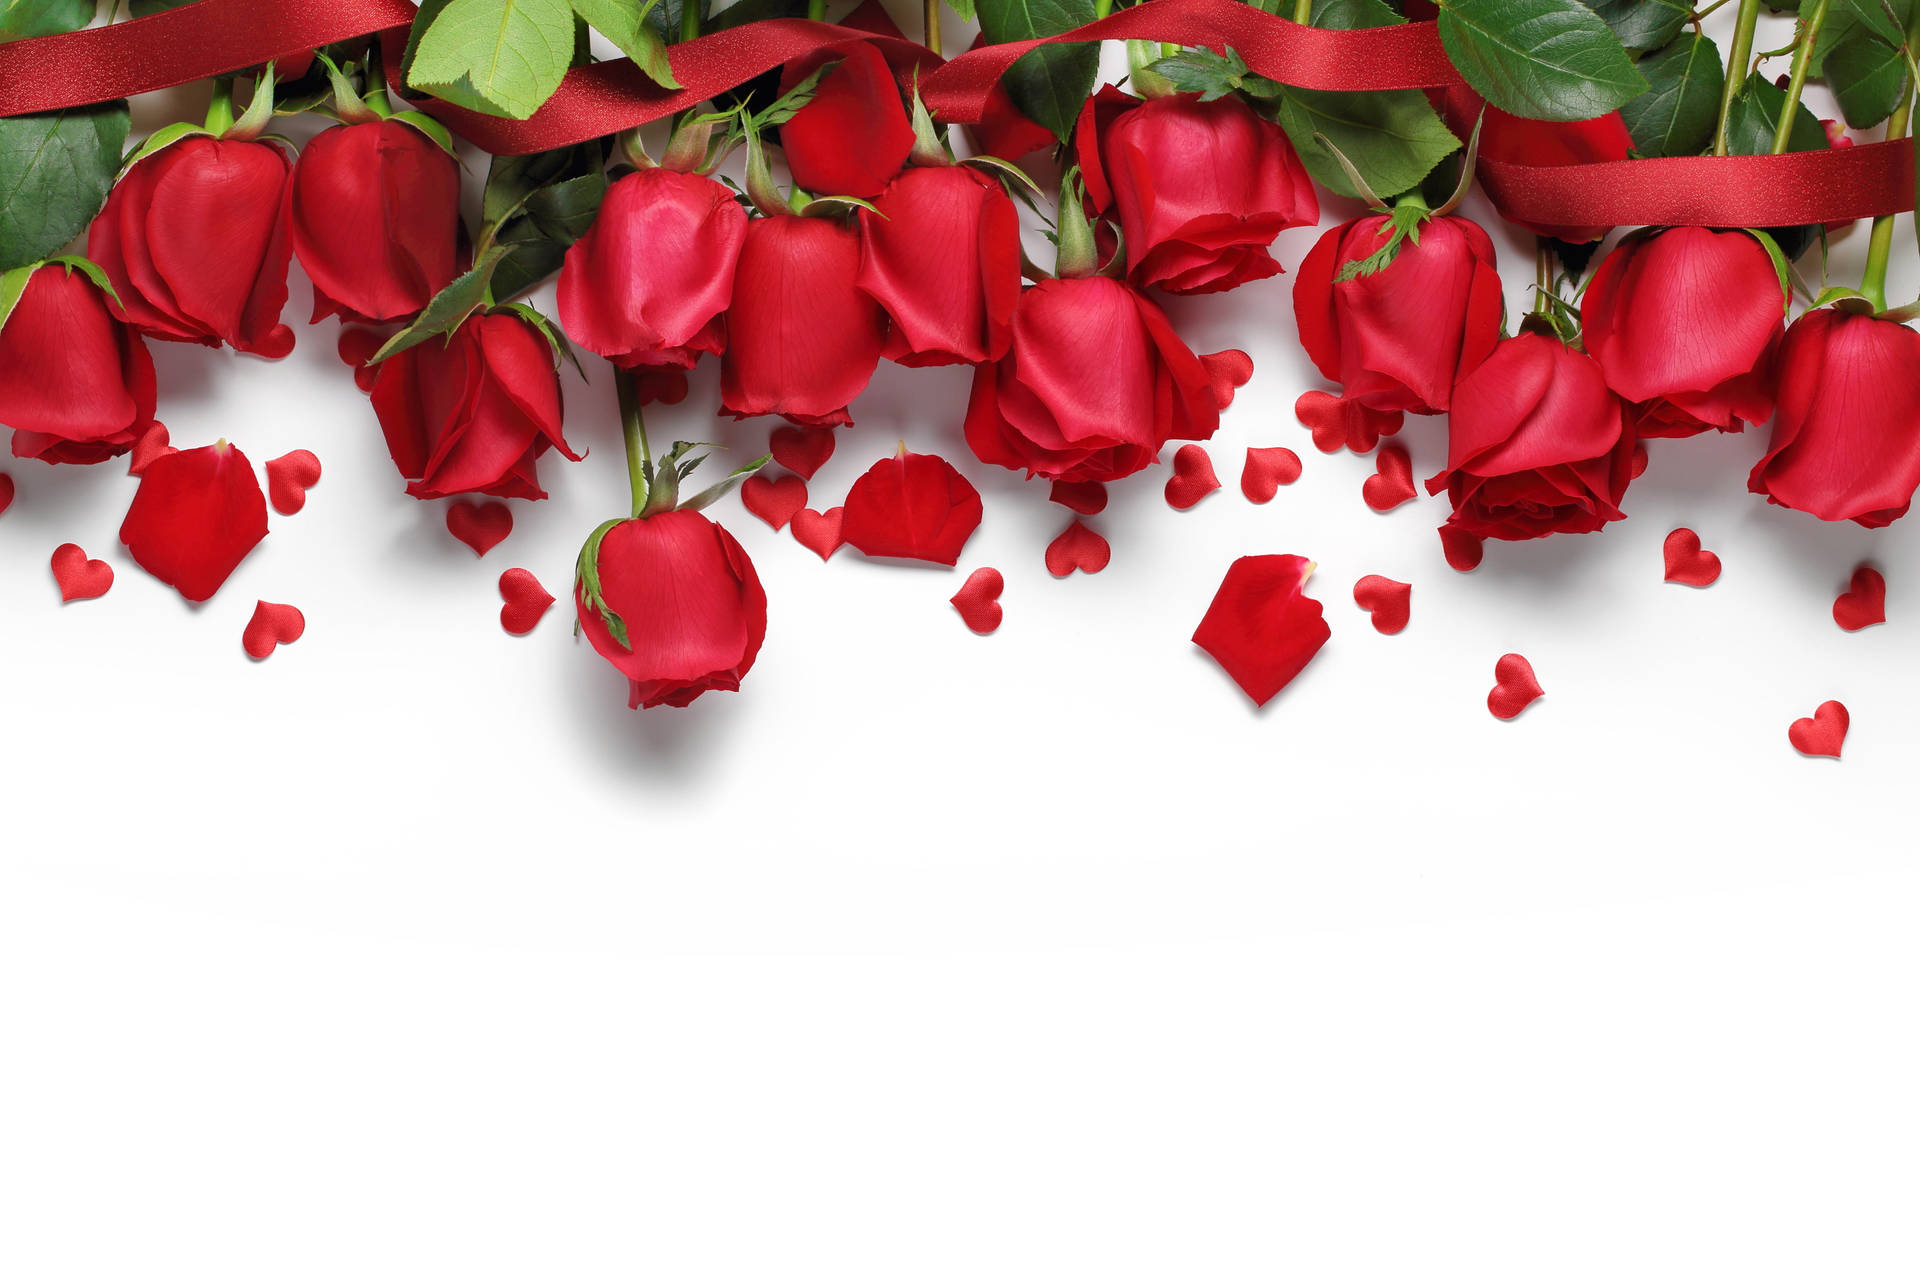 Red Roses Background Design Wallpaper